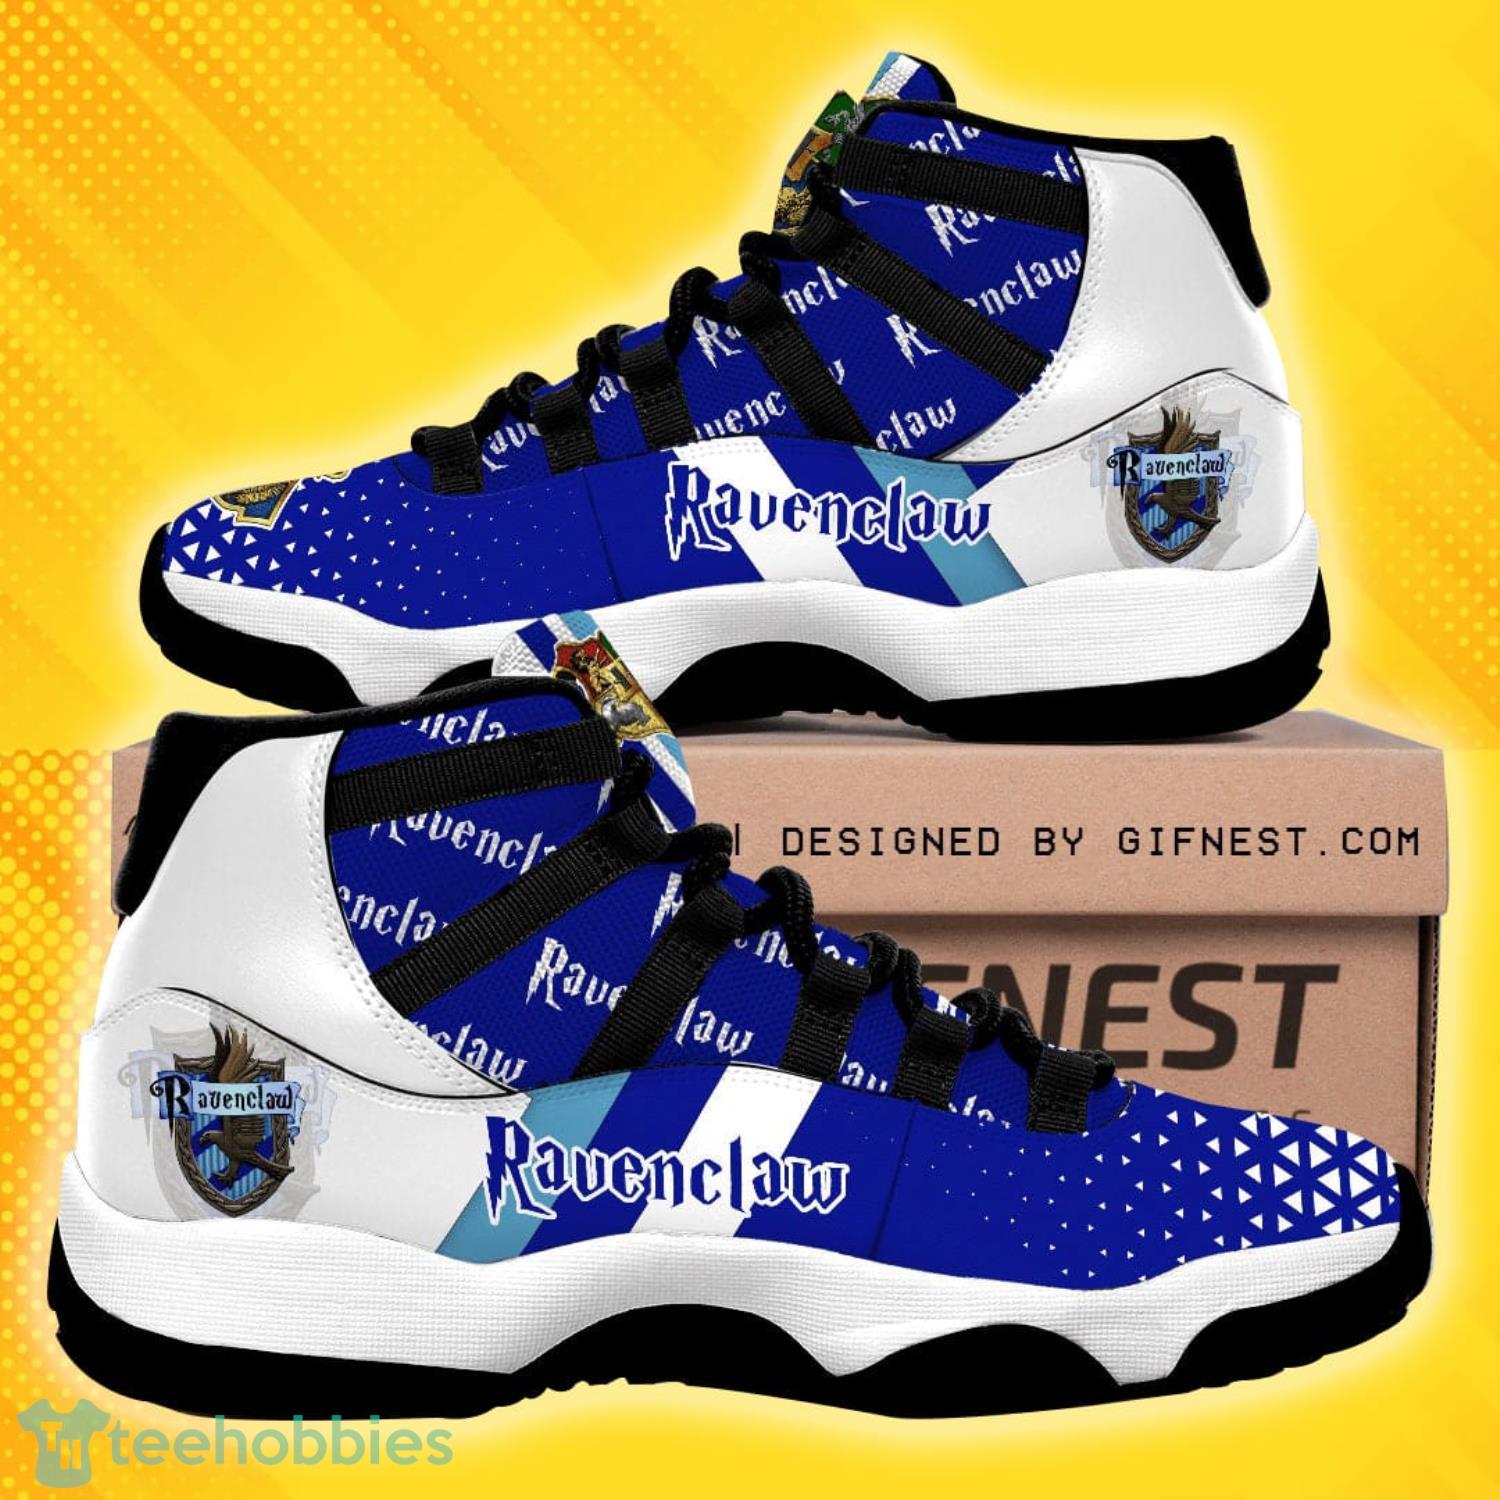 Ravenclaw Team Air Jordan 11 Shoes For Fans Product Photo 1